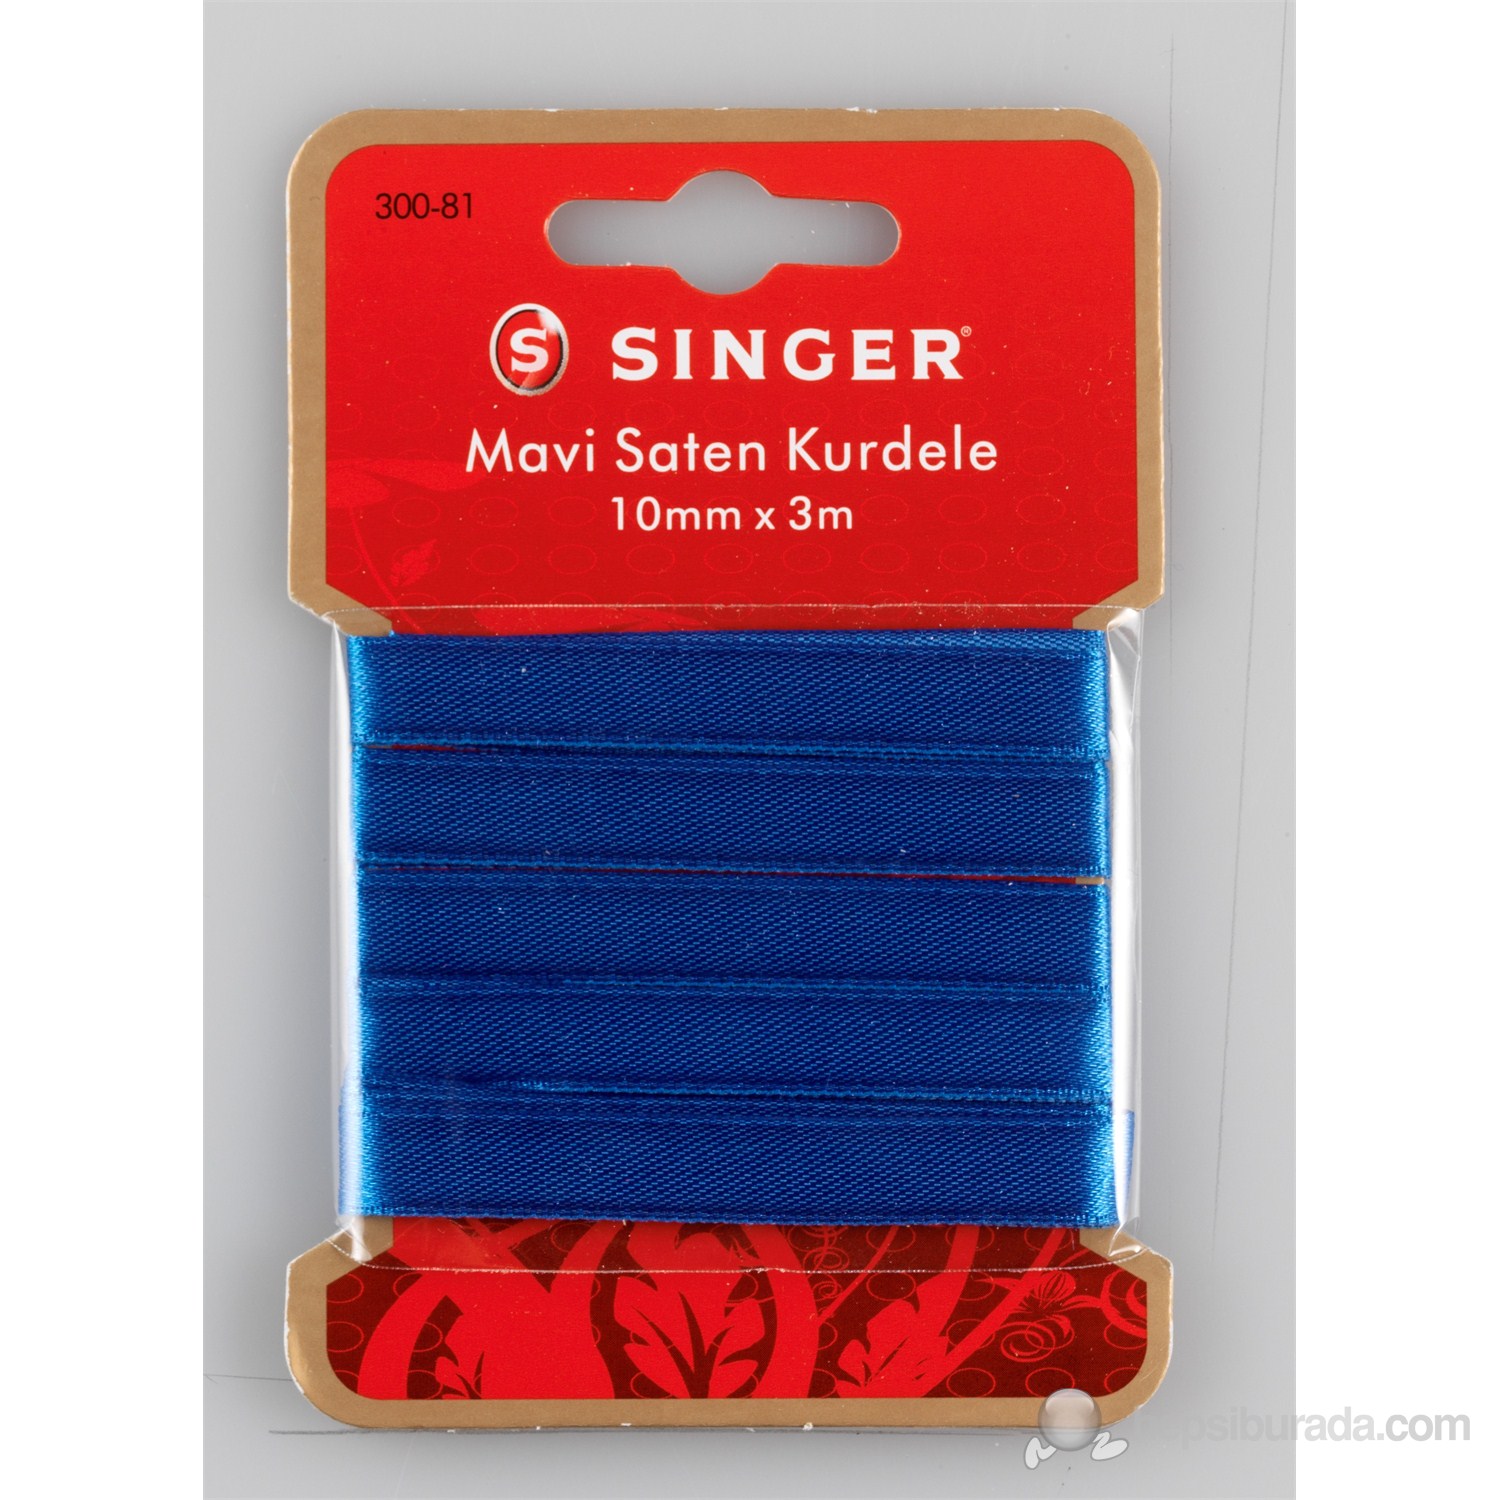 Singer 300-81 Mavi Saten Kurdele (10 mm x 3 m)